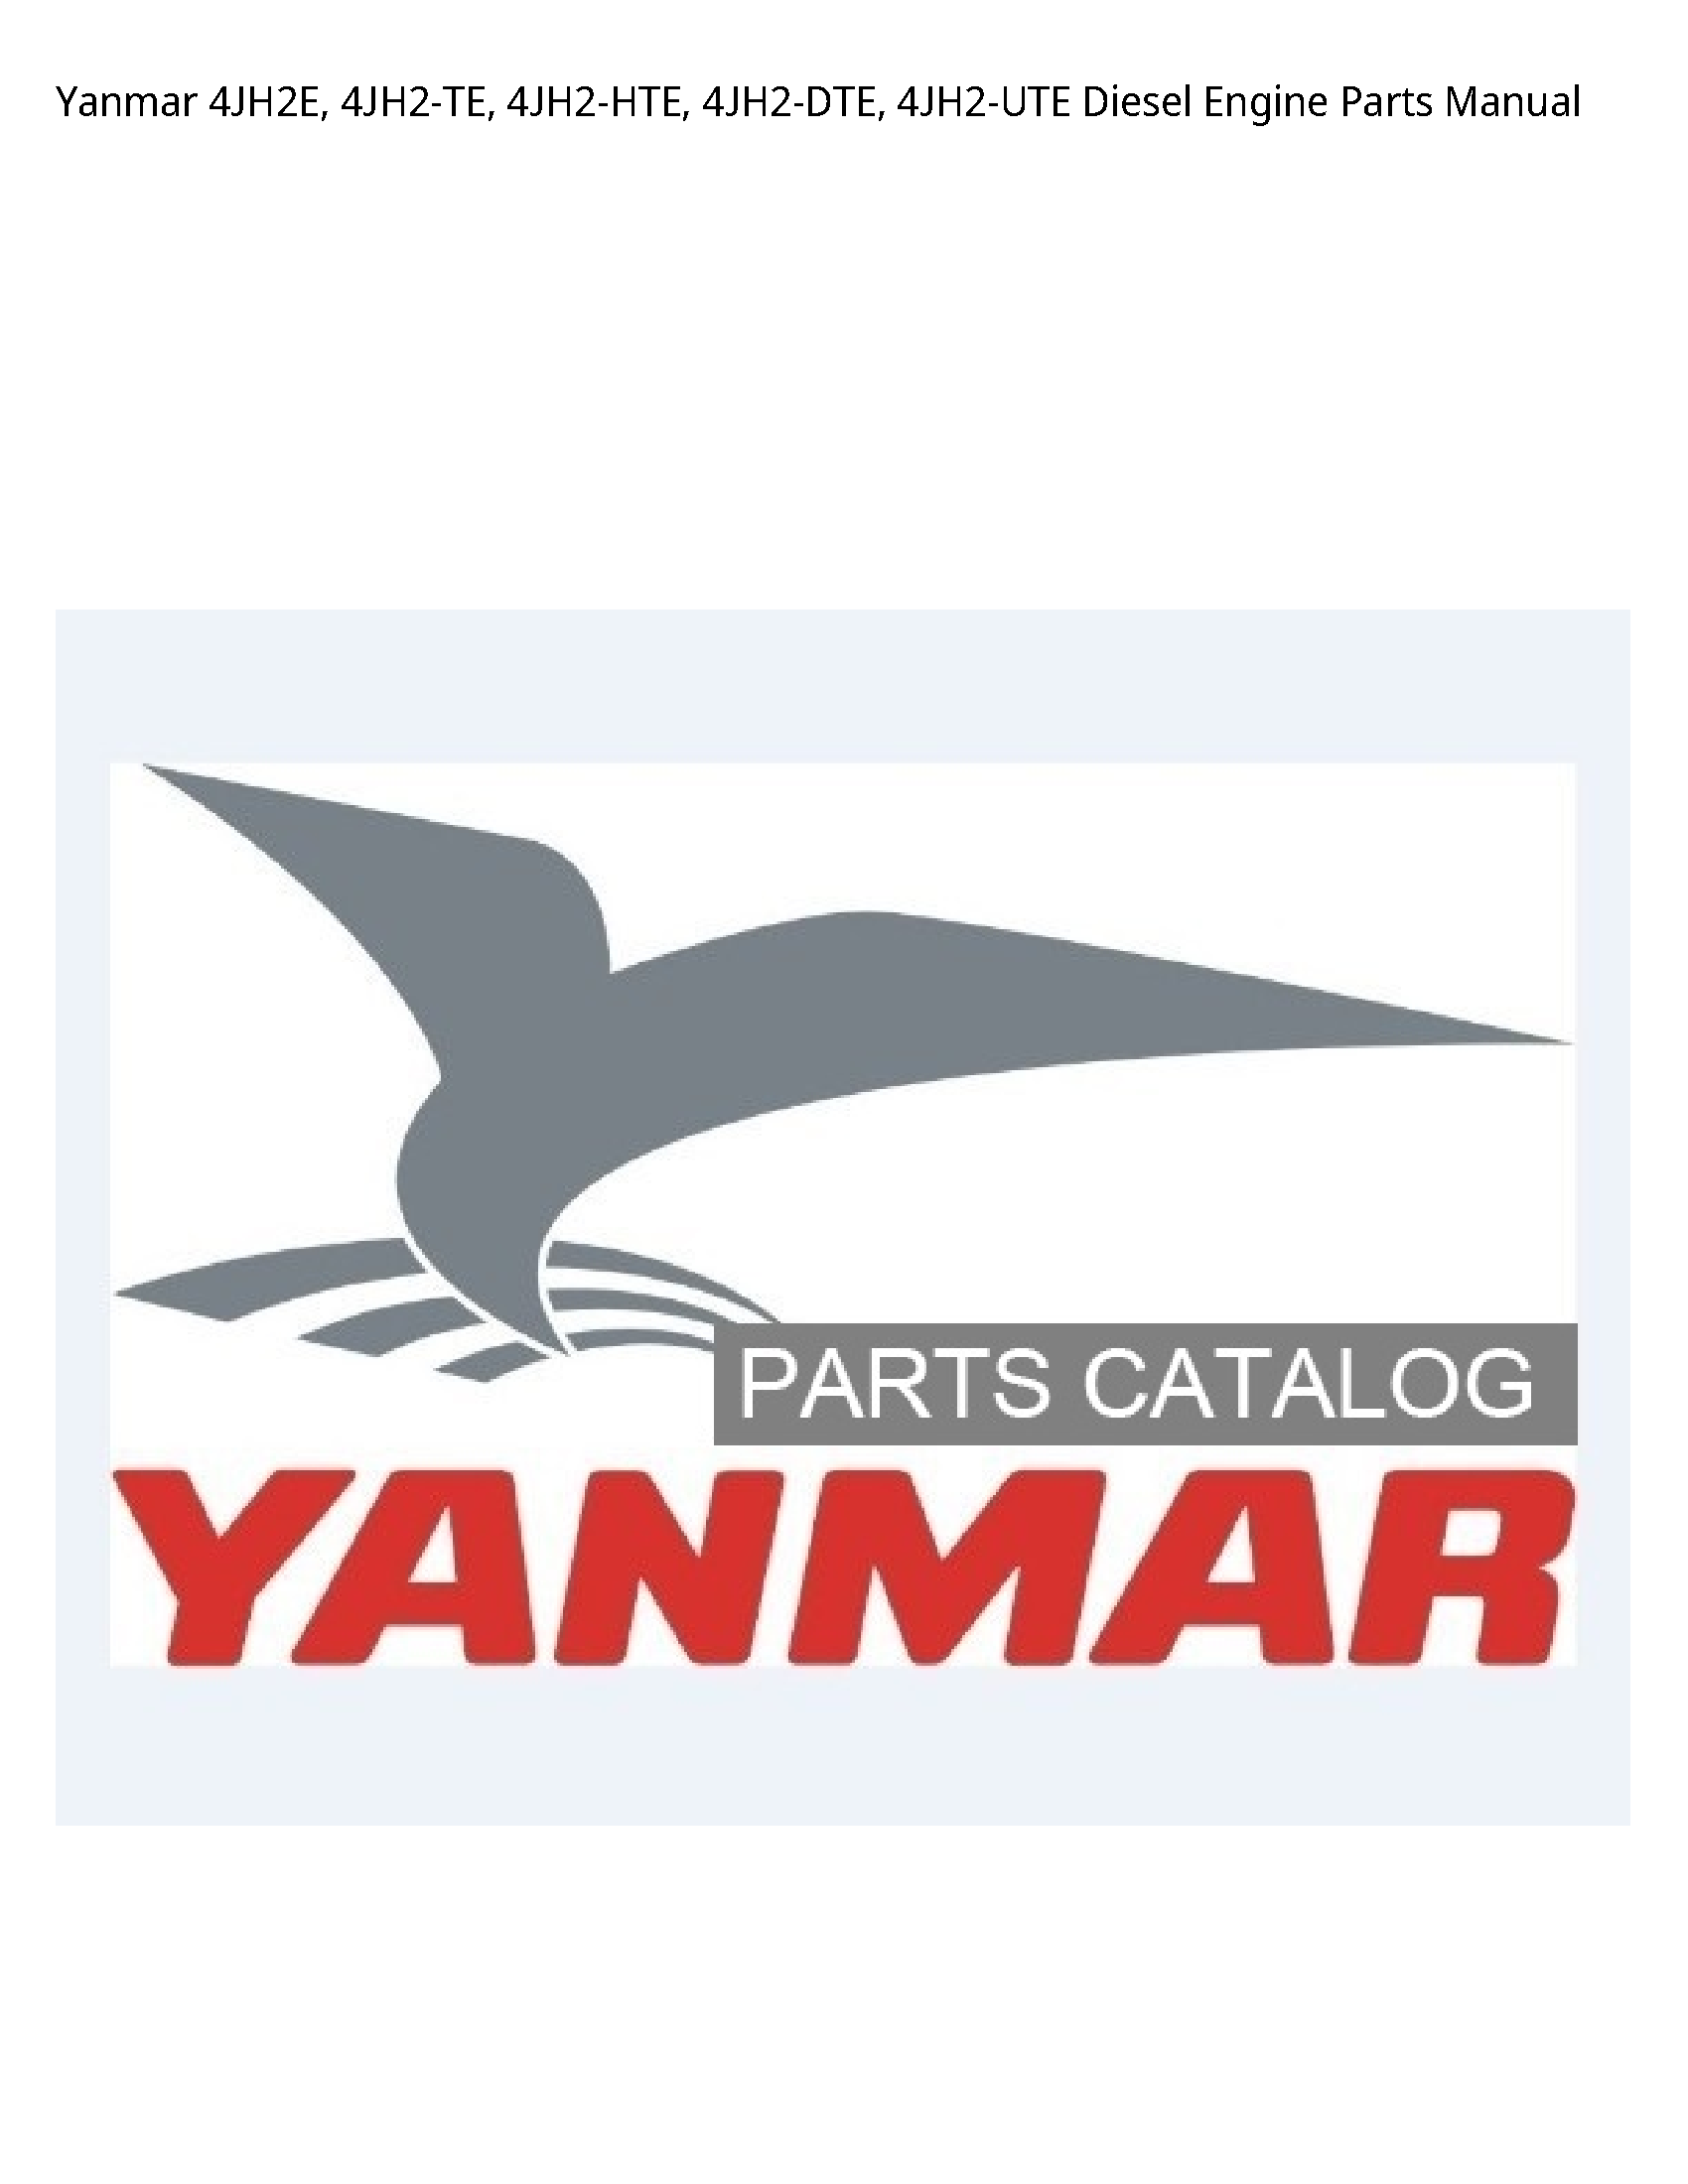 Yanmar 4JH2E Diesel Engine Parts manual